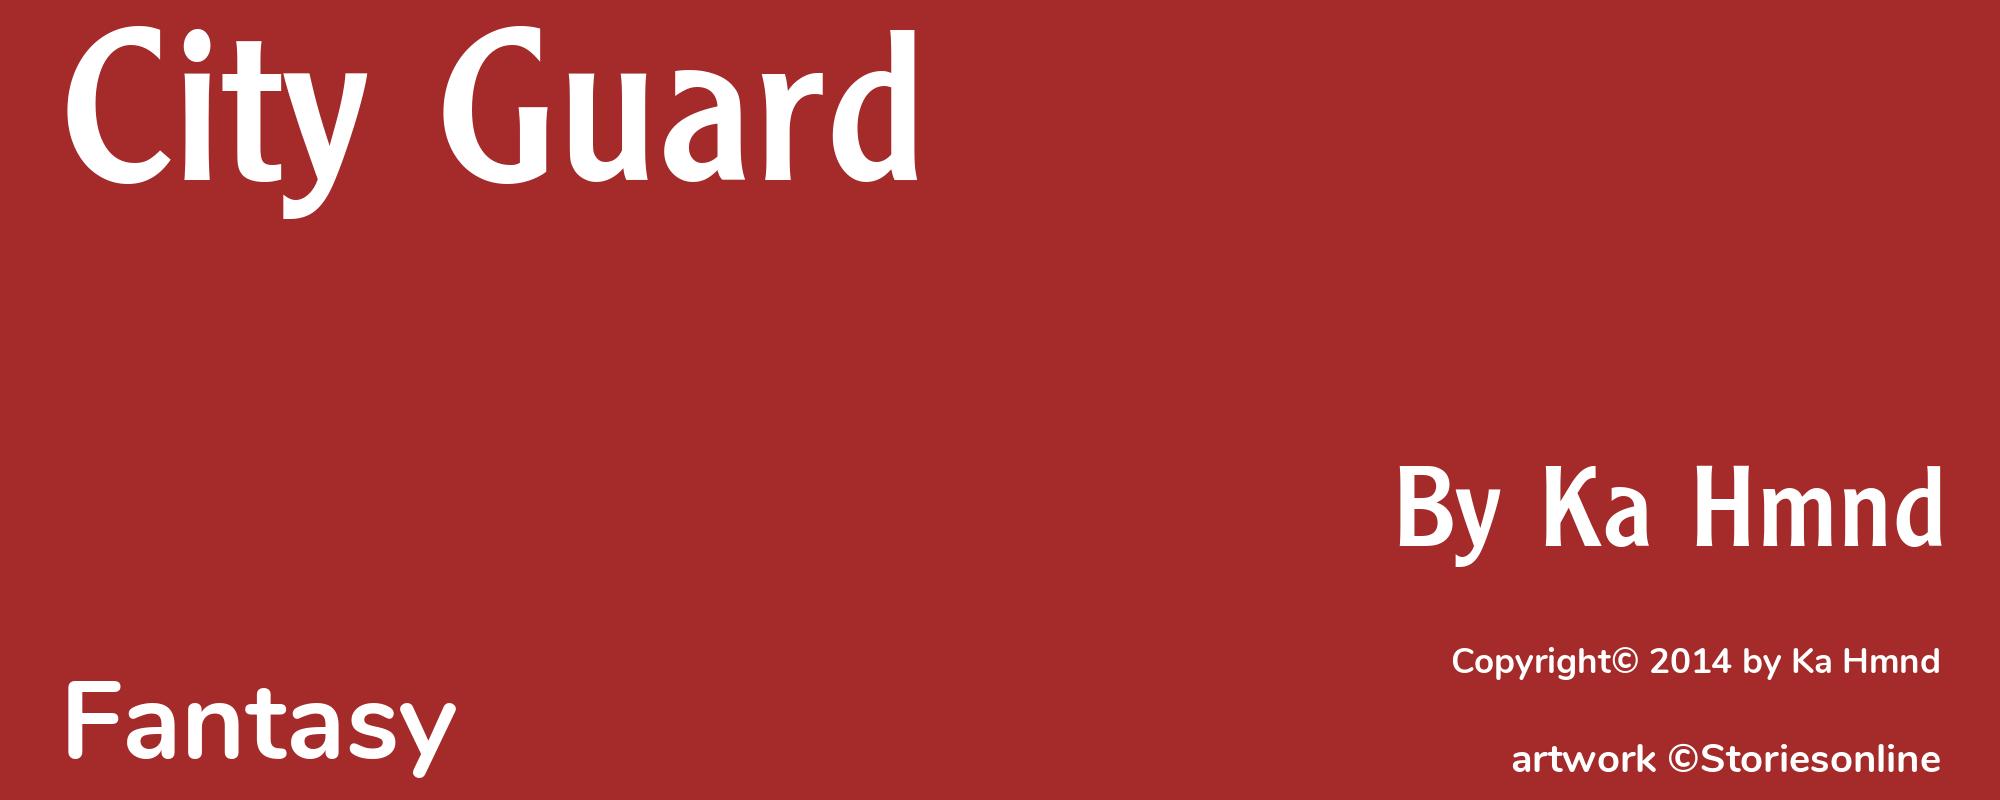 City Guard - Cover